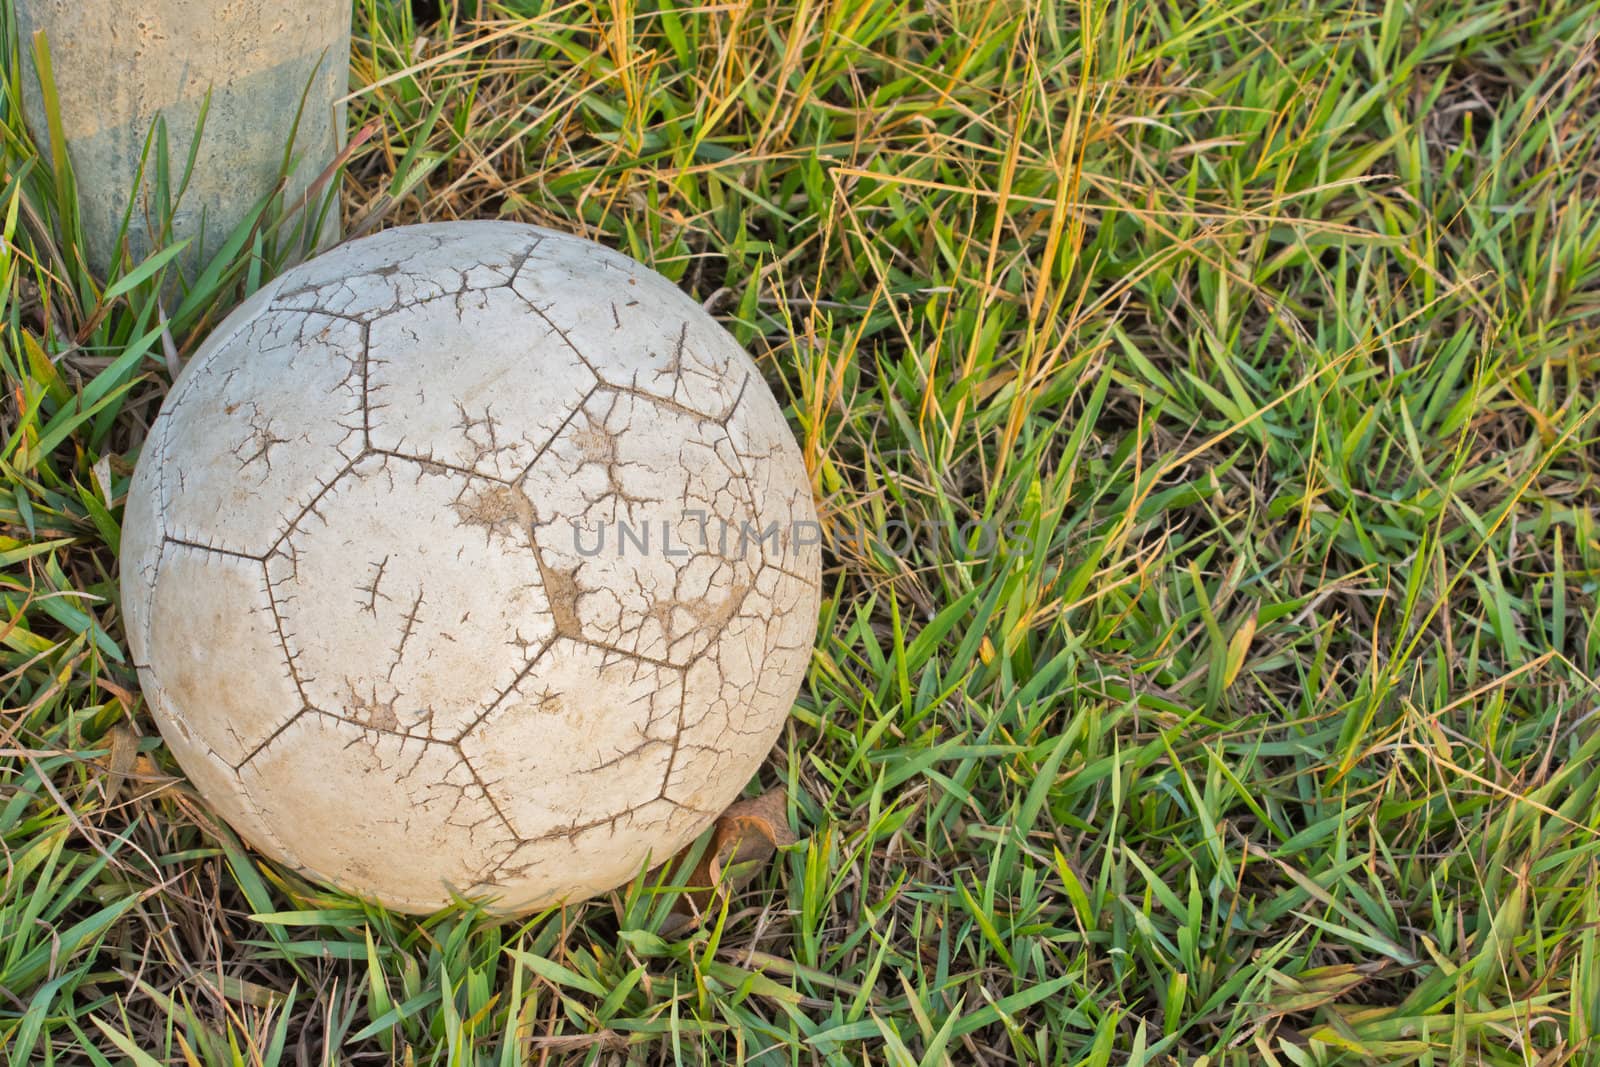 Old Soccer Ball. Poor school soccer field.